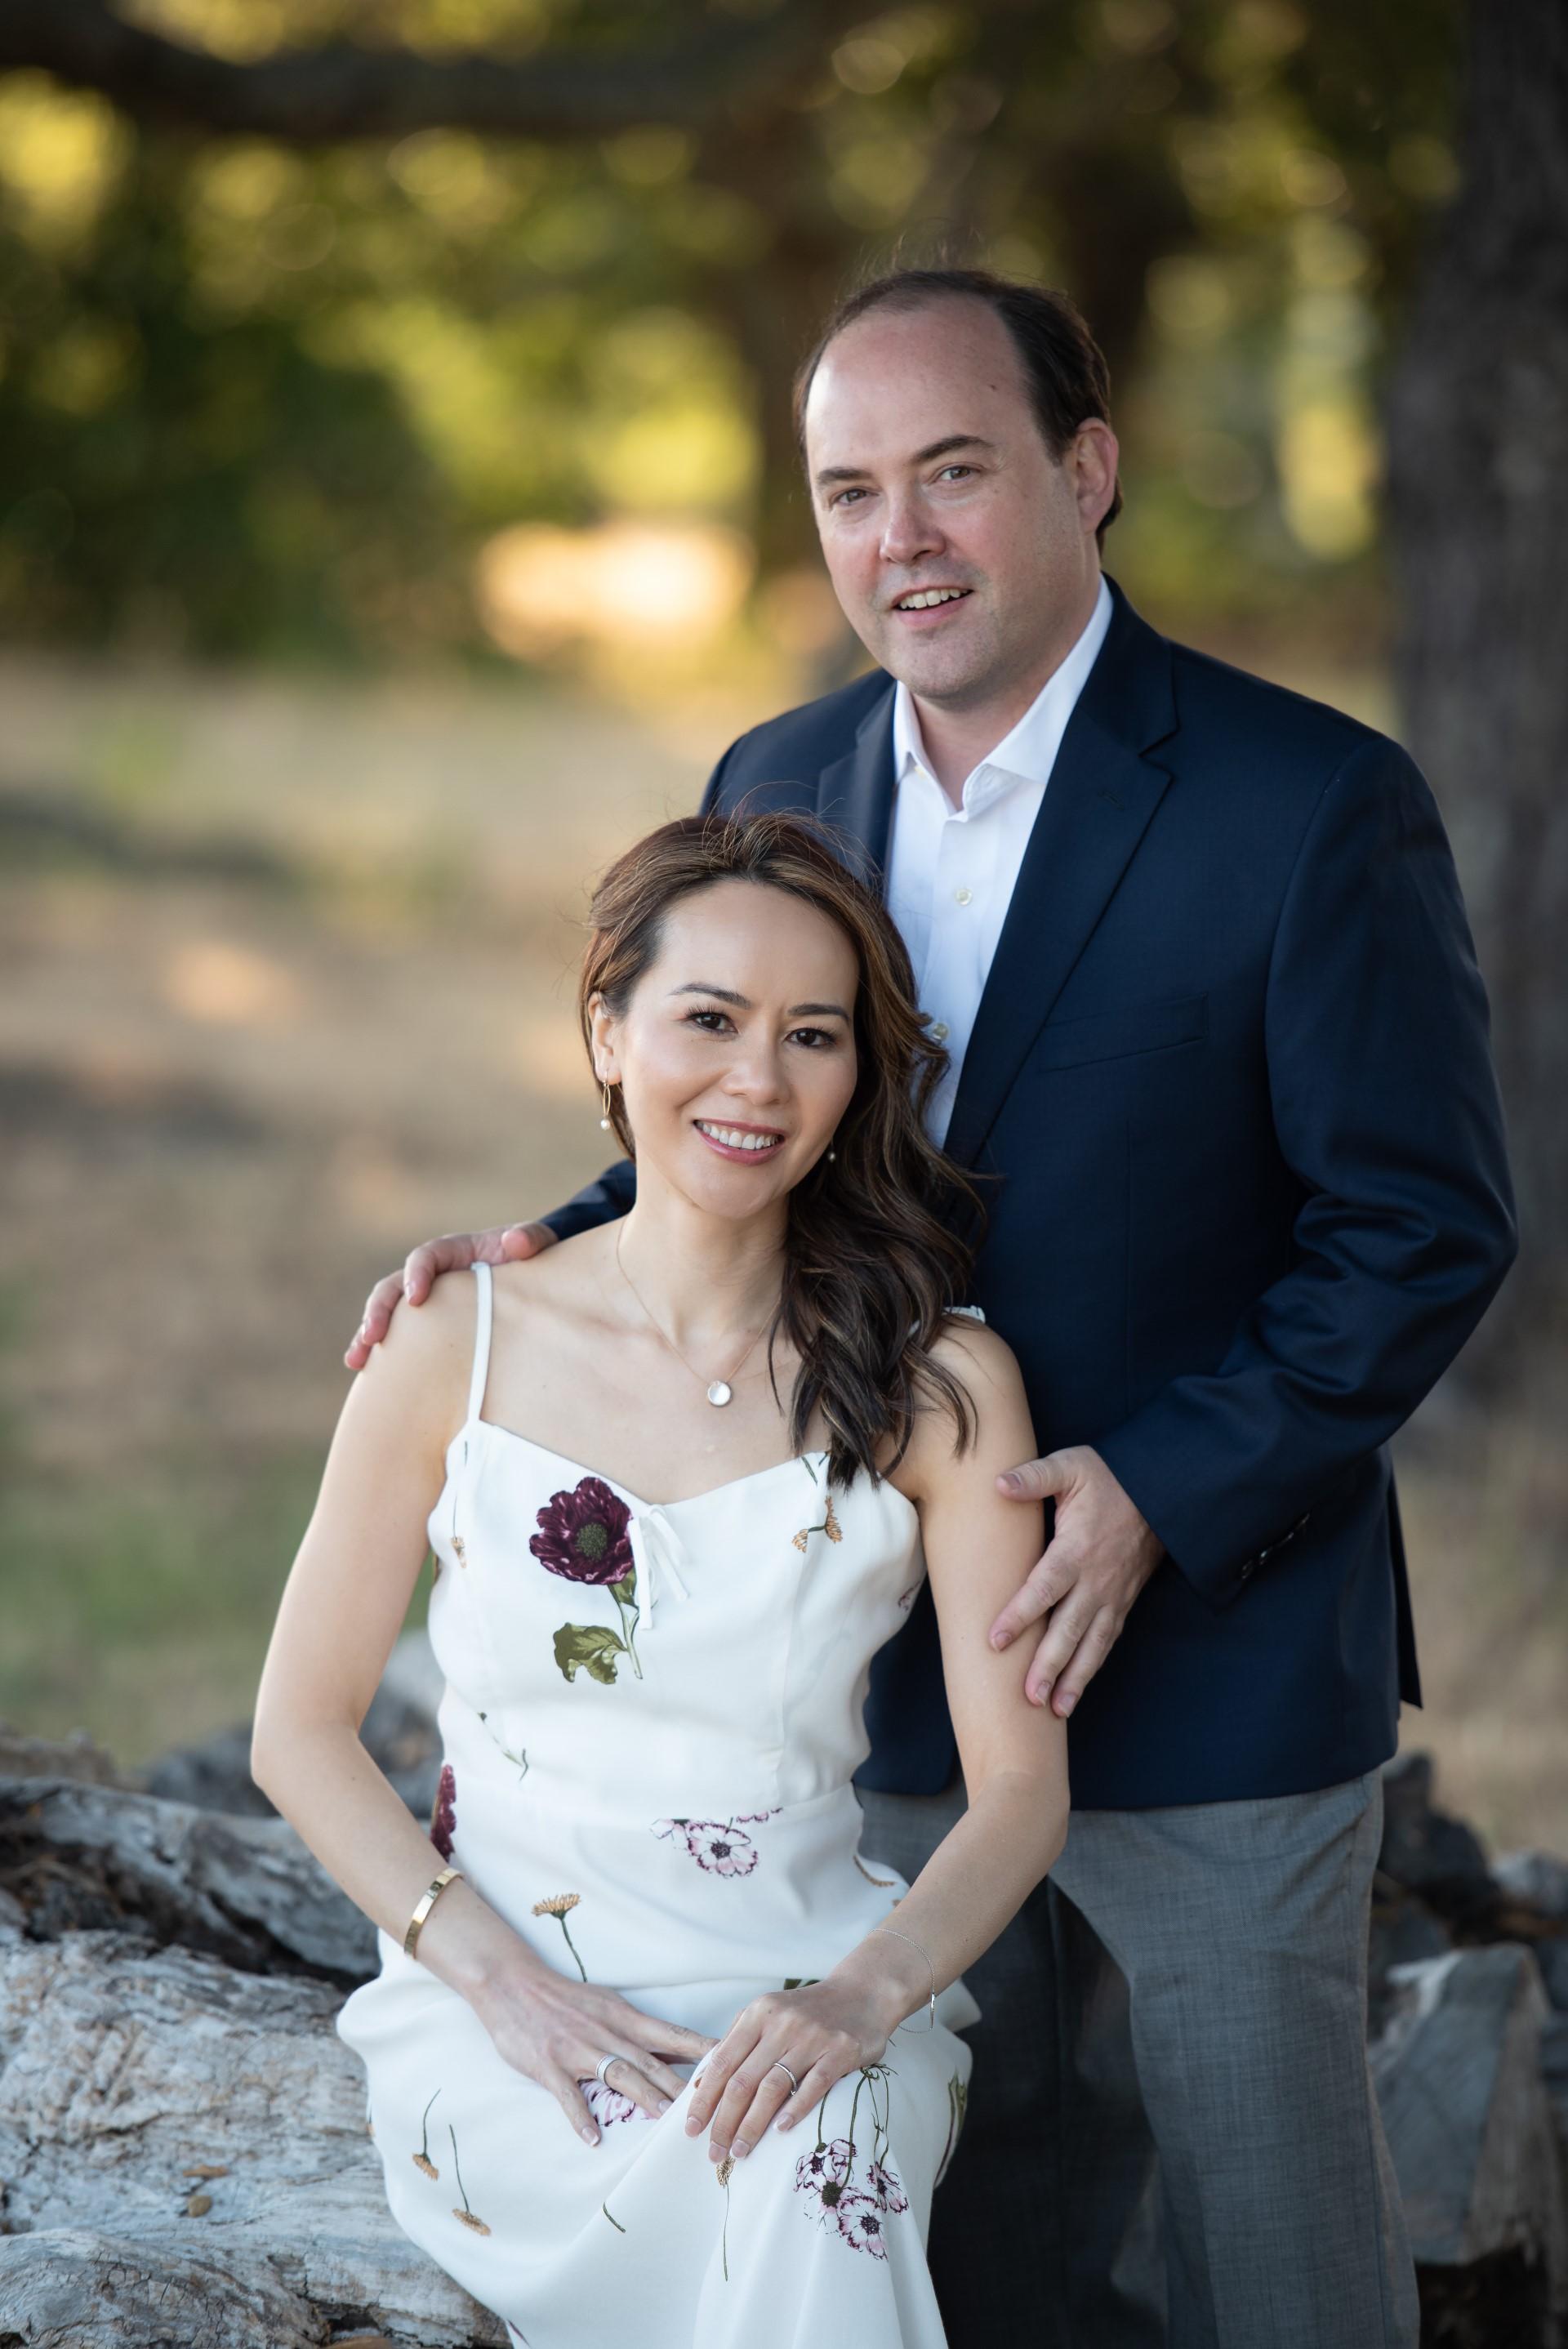 The Wedding Website of Brad Thomasson and Tam Tiet